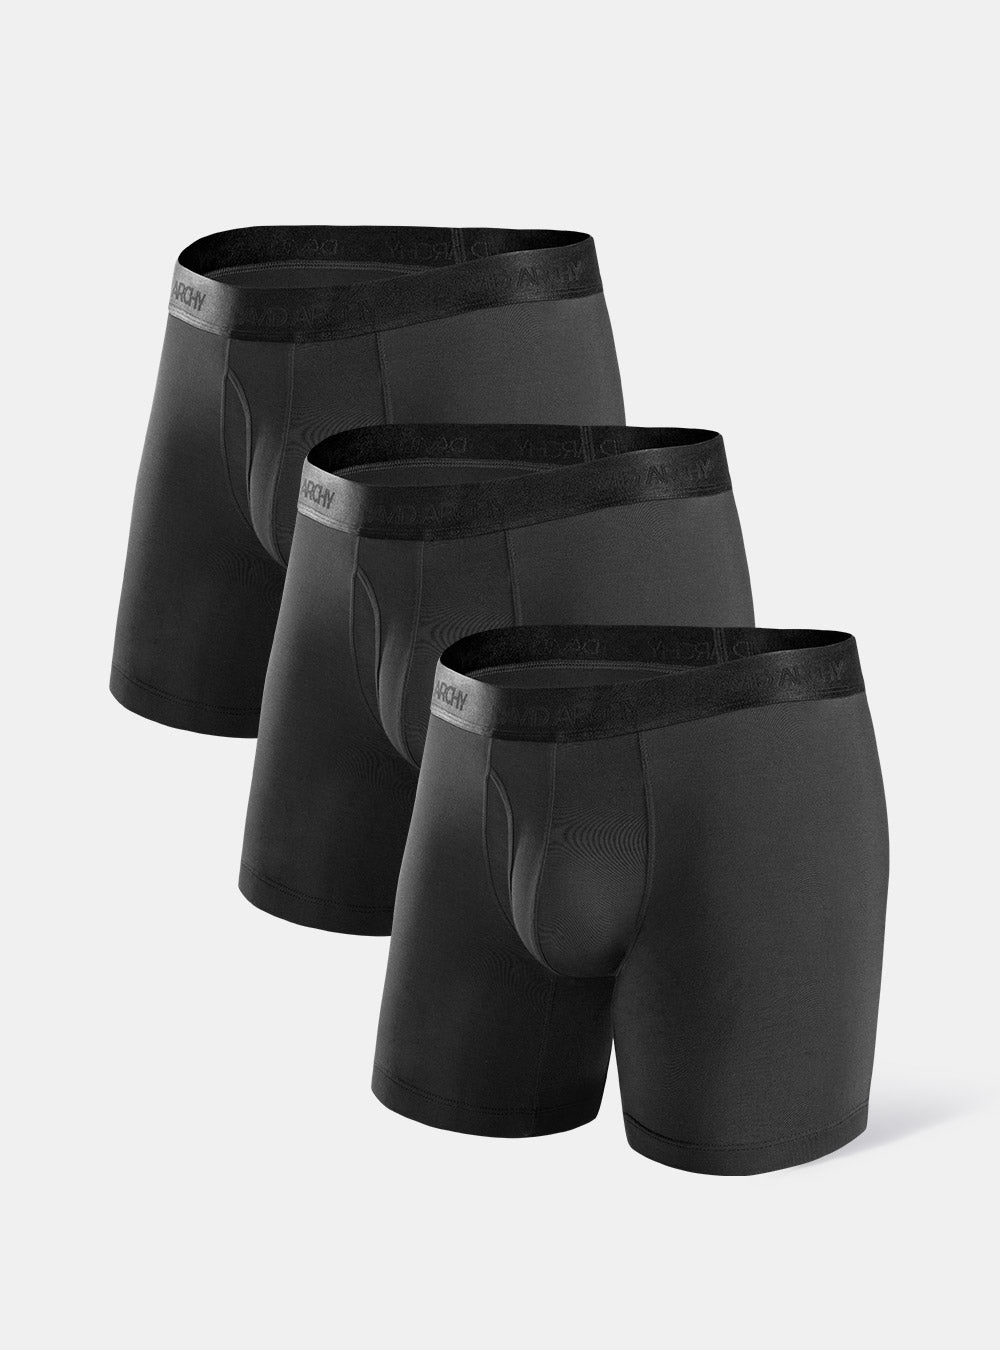 George Men's Regular Leg Boxer Briefs, 4-Pack, Sizes S- XL